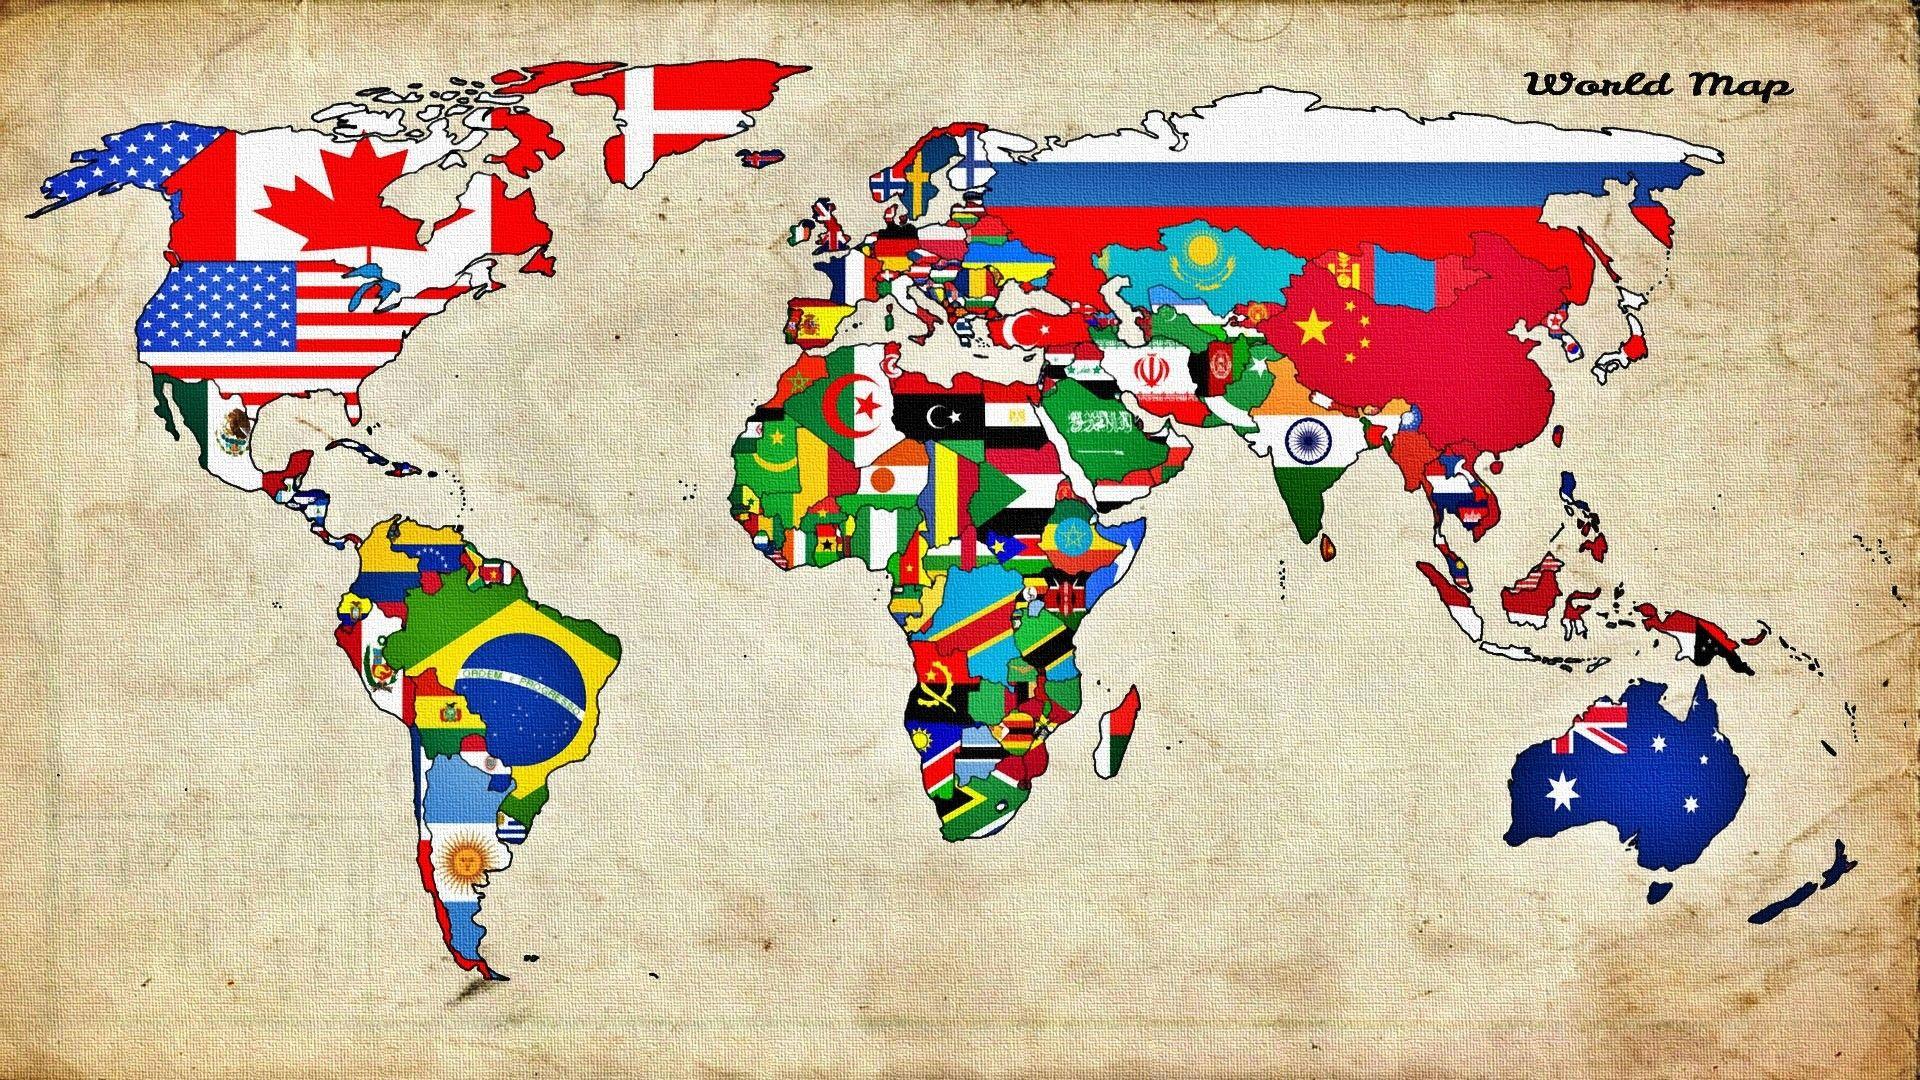 Wallpaper, illustration, flag, world map, countries, mural, ART